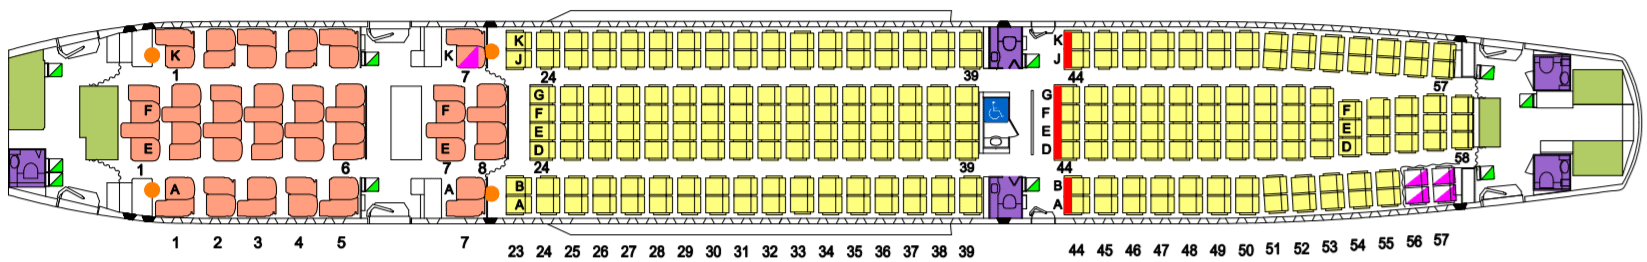 Qantas A330-200 Seat Map (271)